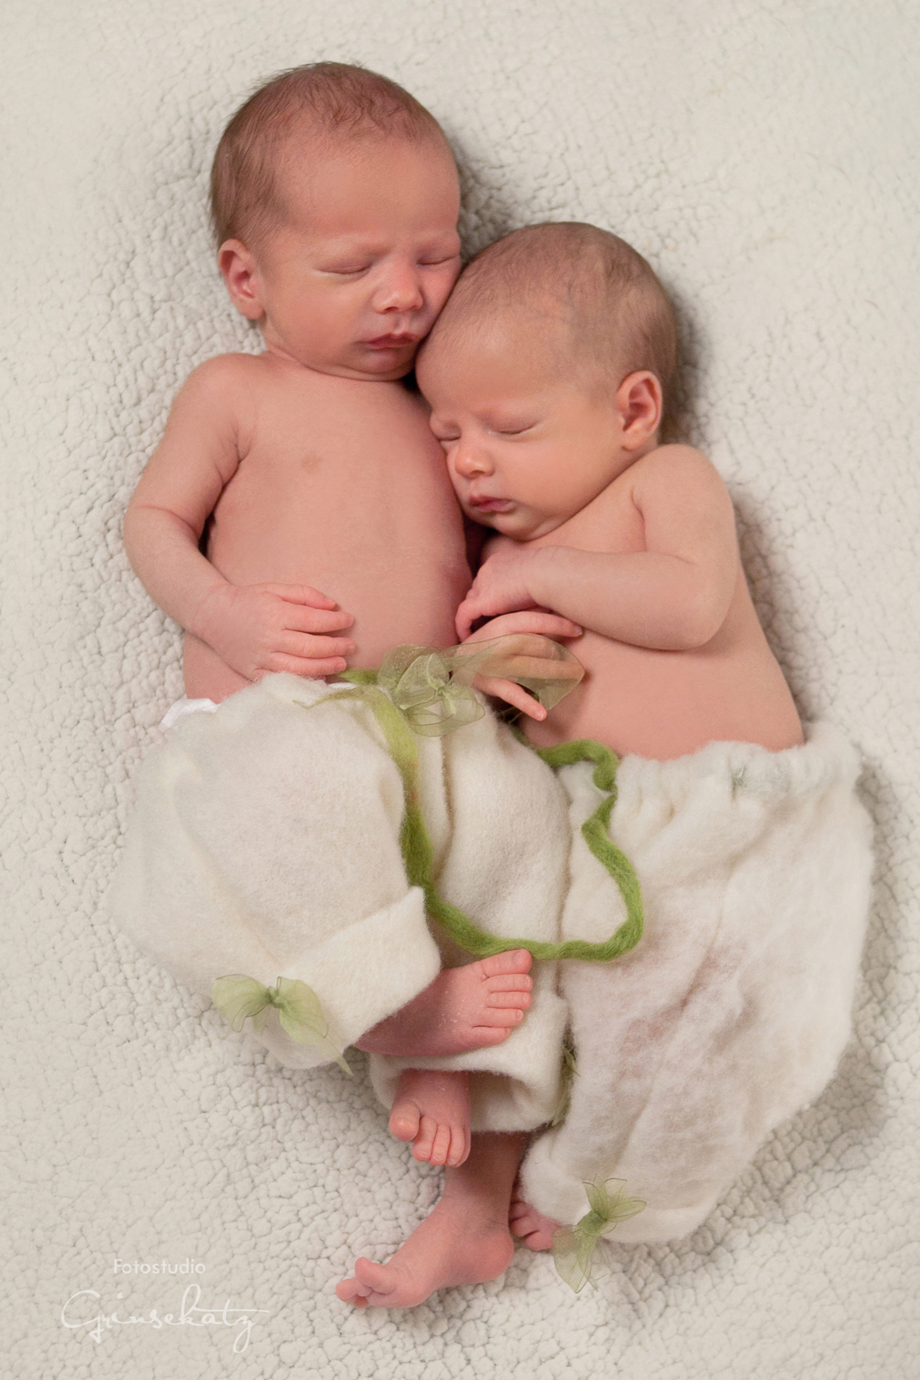 zwillinge neugeborenes newborn twins